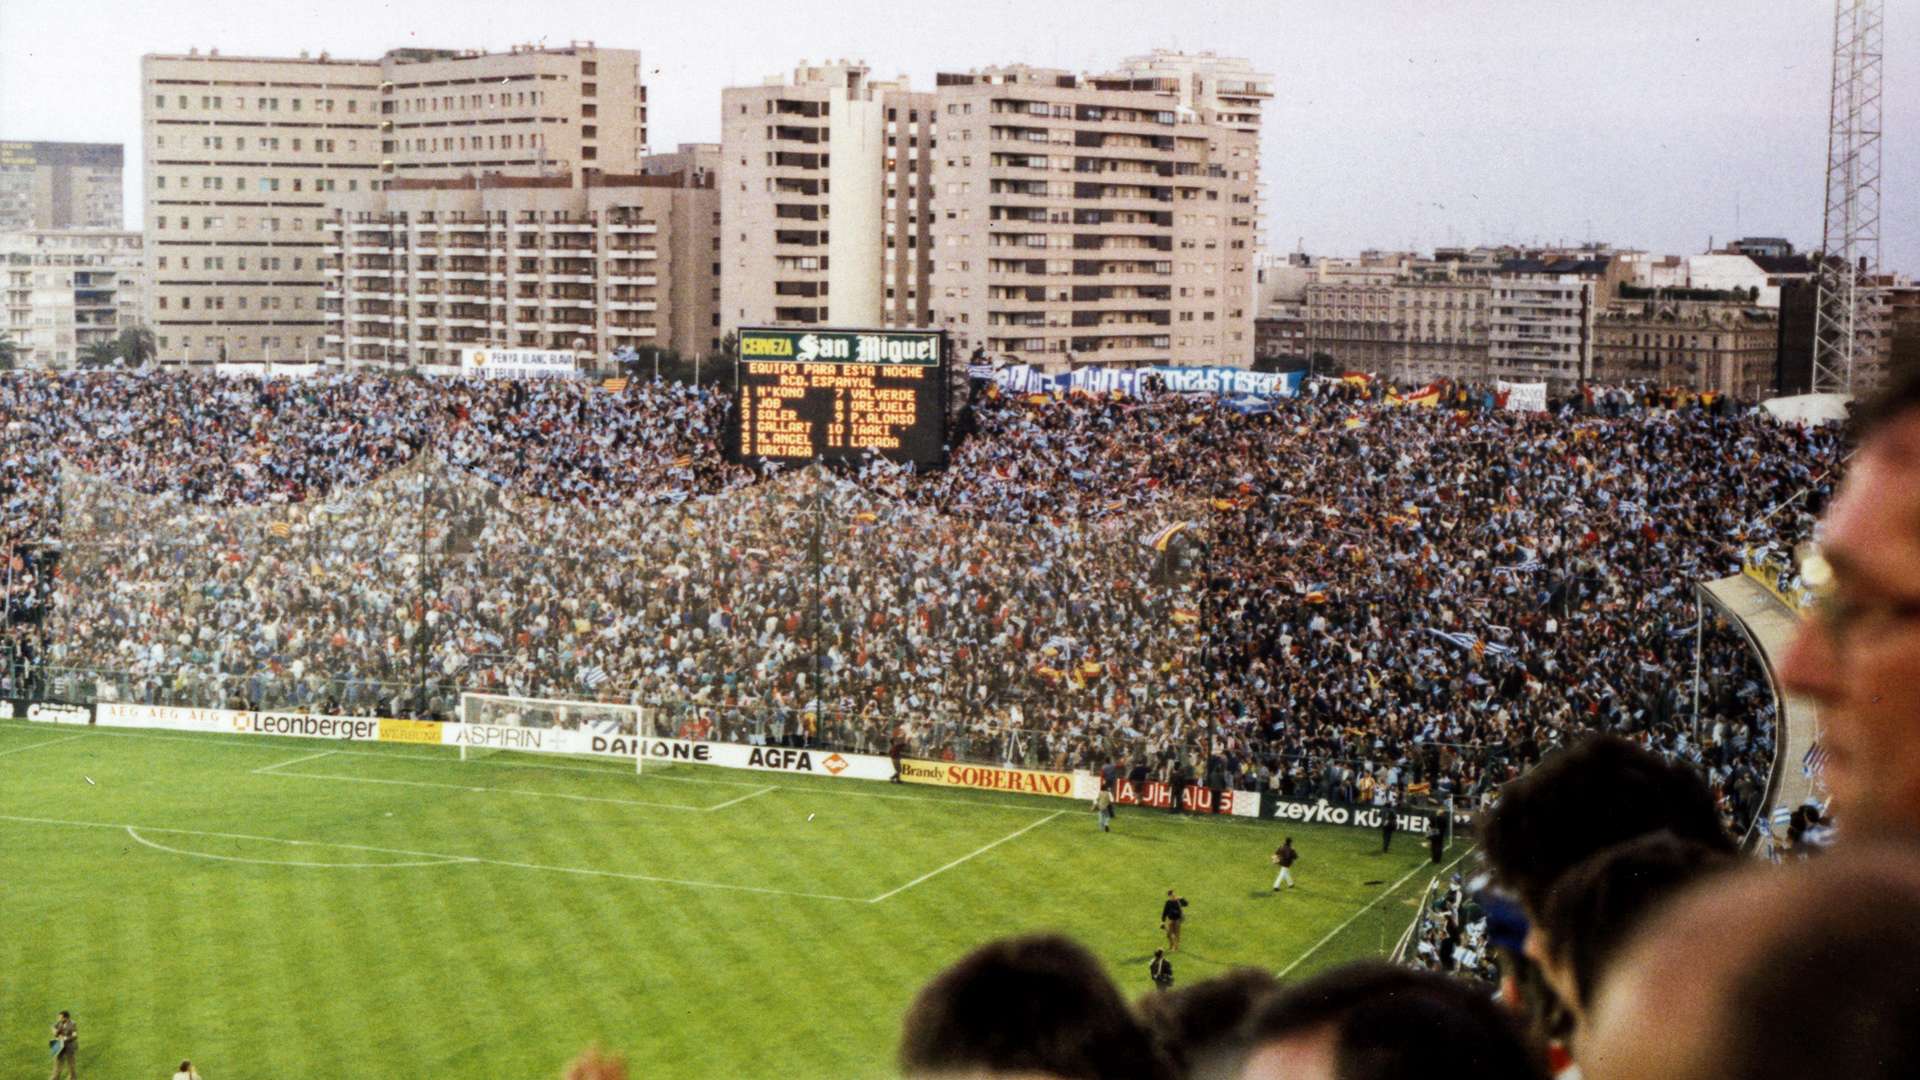 UEFA-Cup '88 - Bruchlandung in Barcelona | Bayer04.de